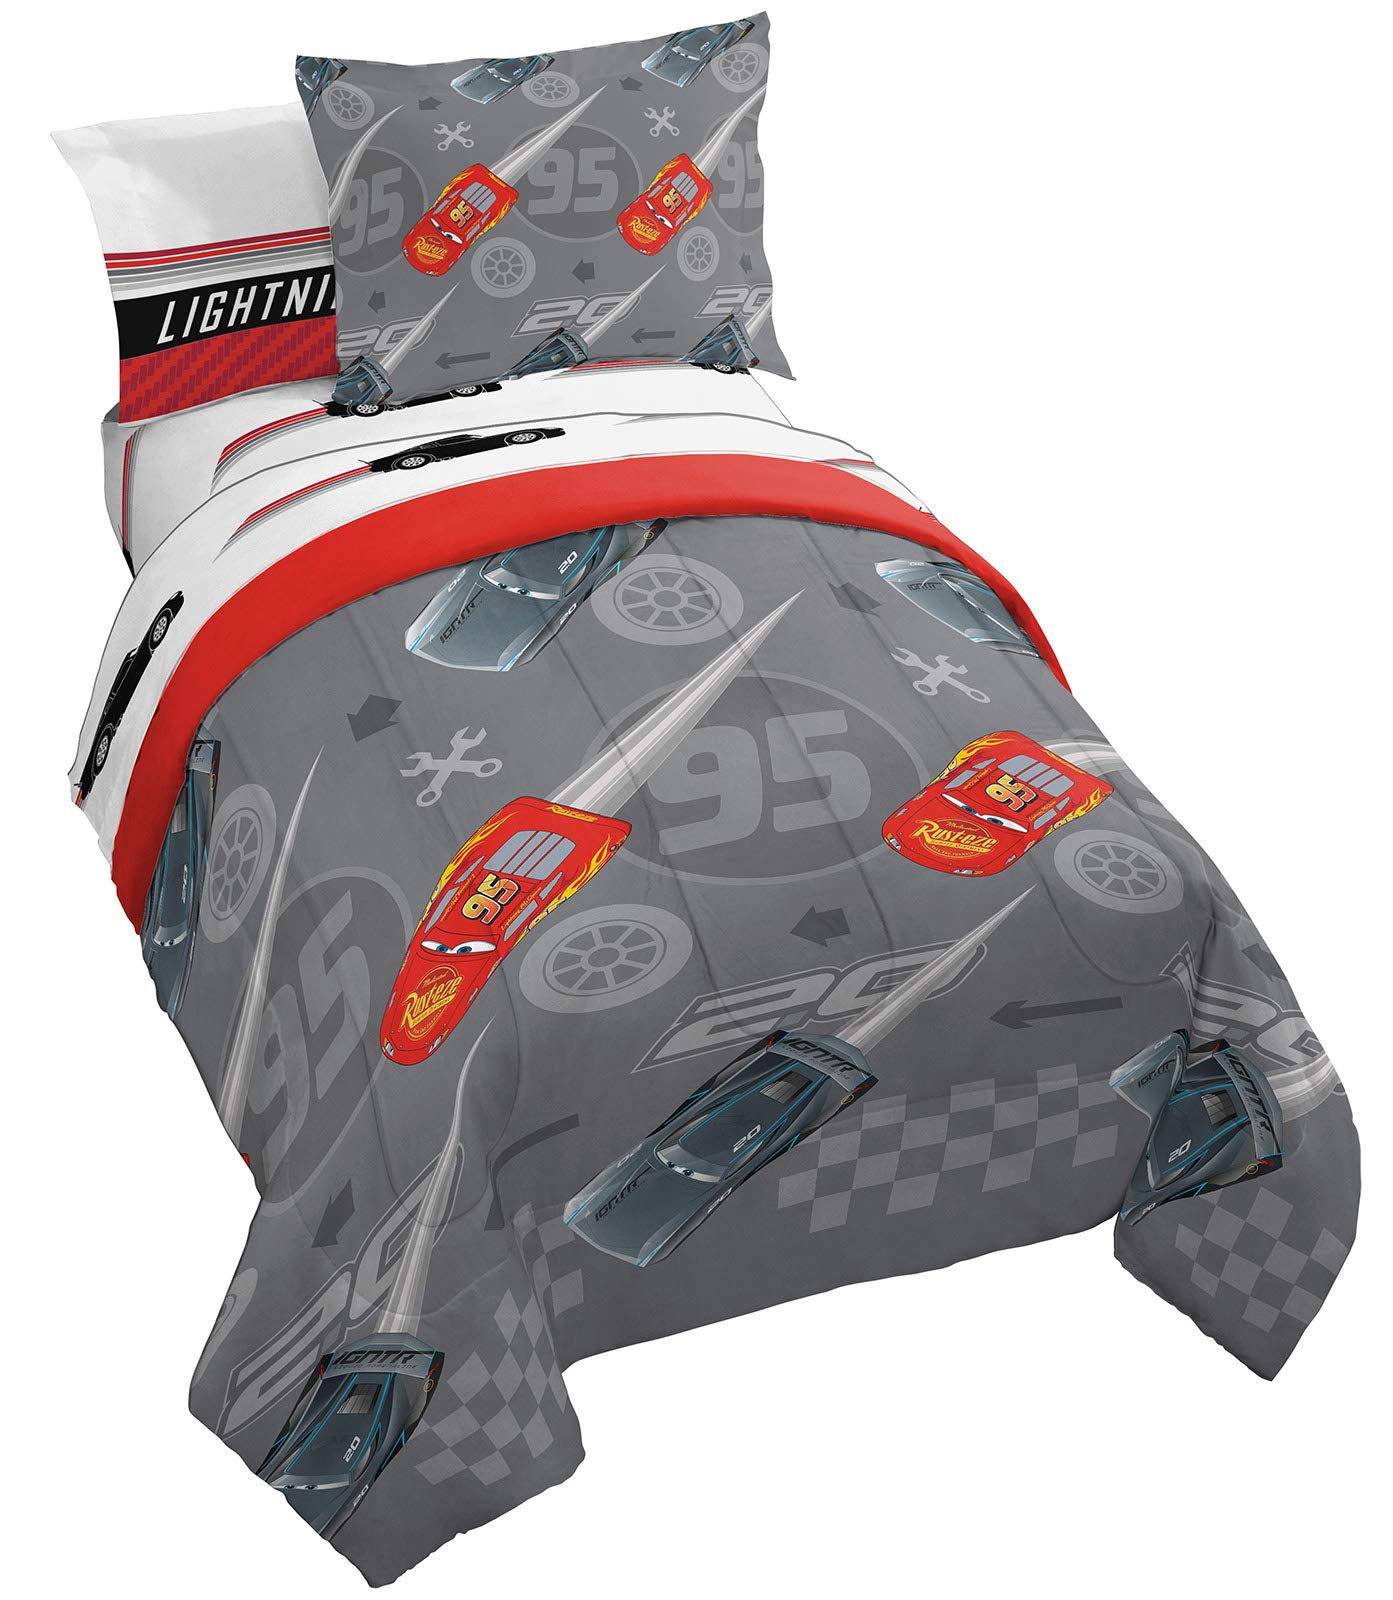 Disney Pixar Cars Lightening Speed 5 Piece Twin Bed Set - Includes Comforter & Sheet Set - Bedding Features Lightning McQueen - Super Soft Fade Res...